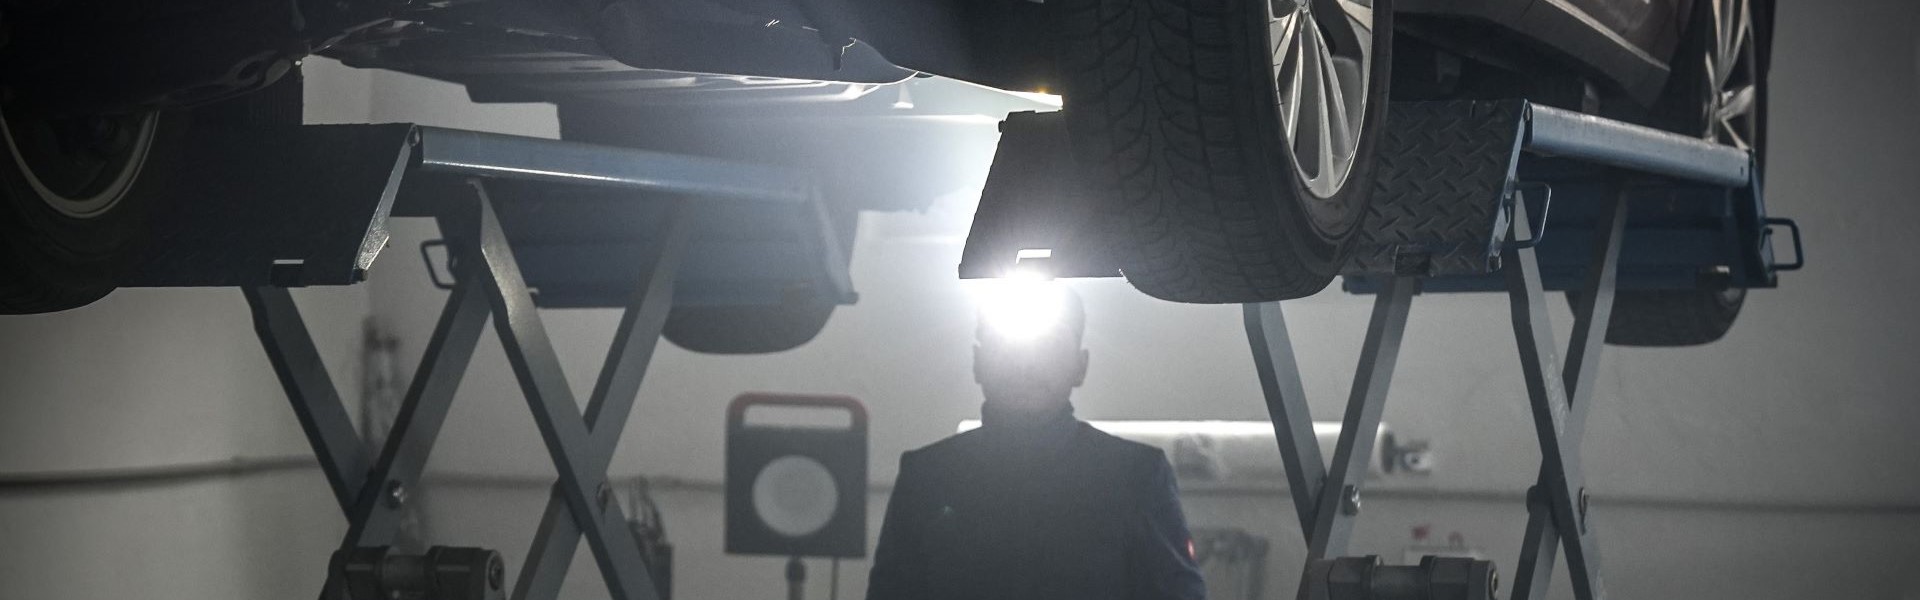 Man with a headlamp für Car Mechanics